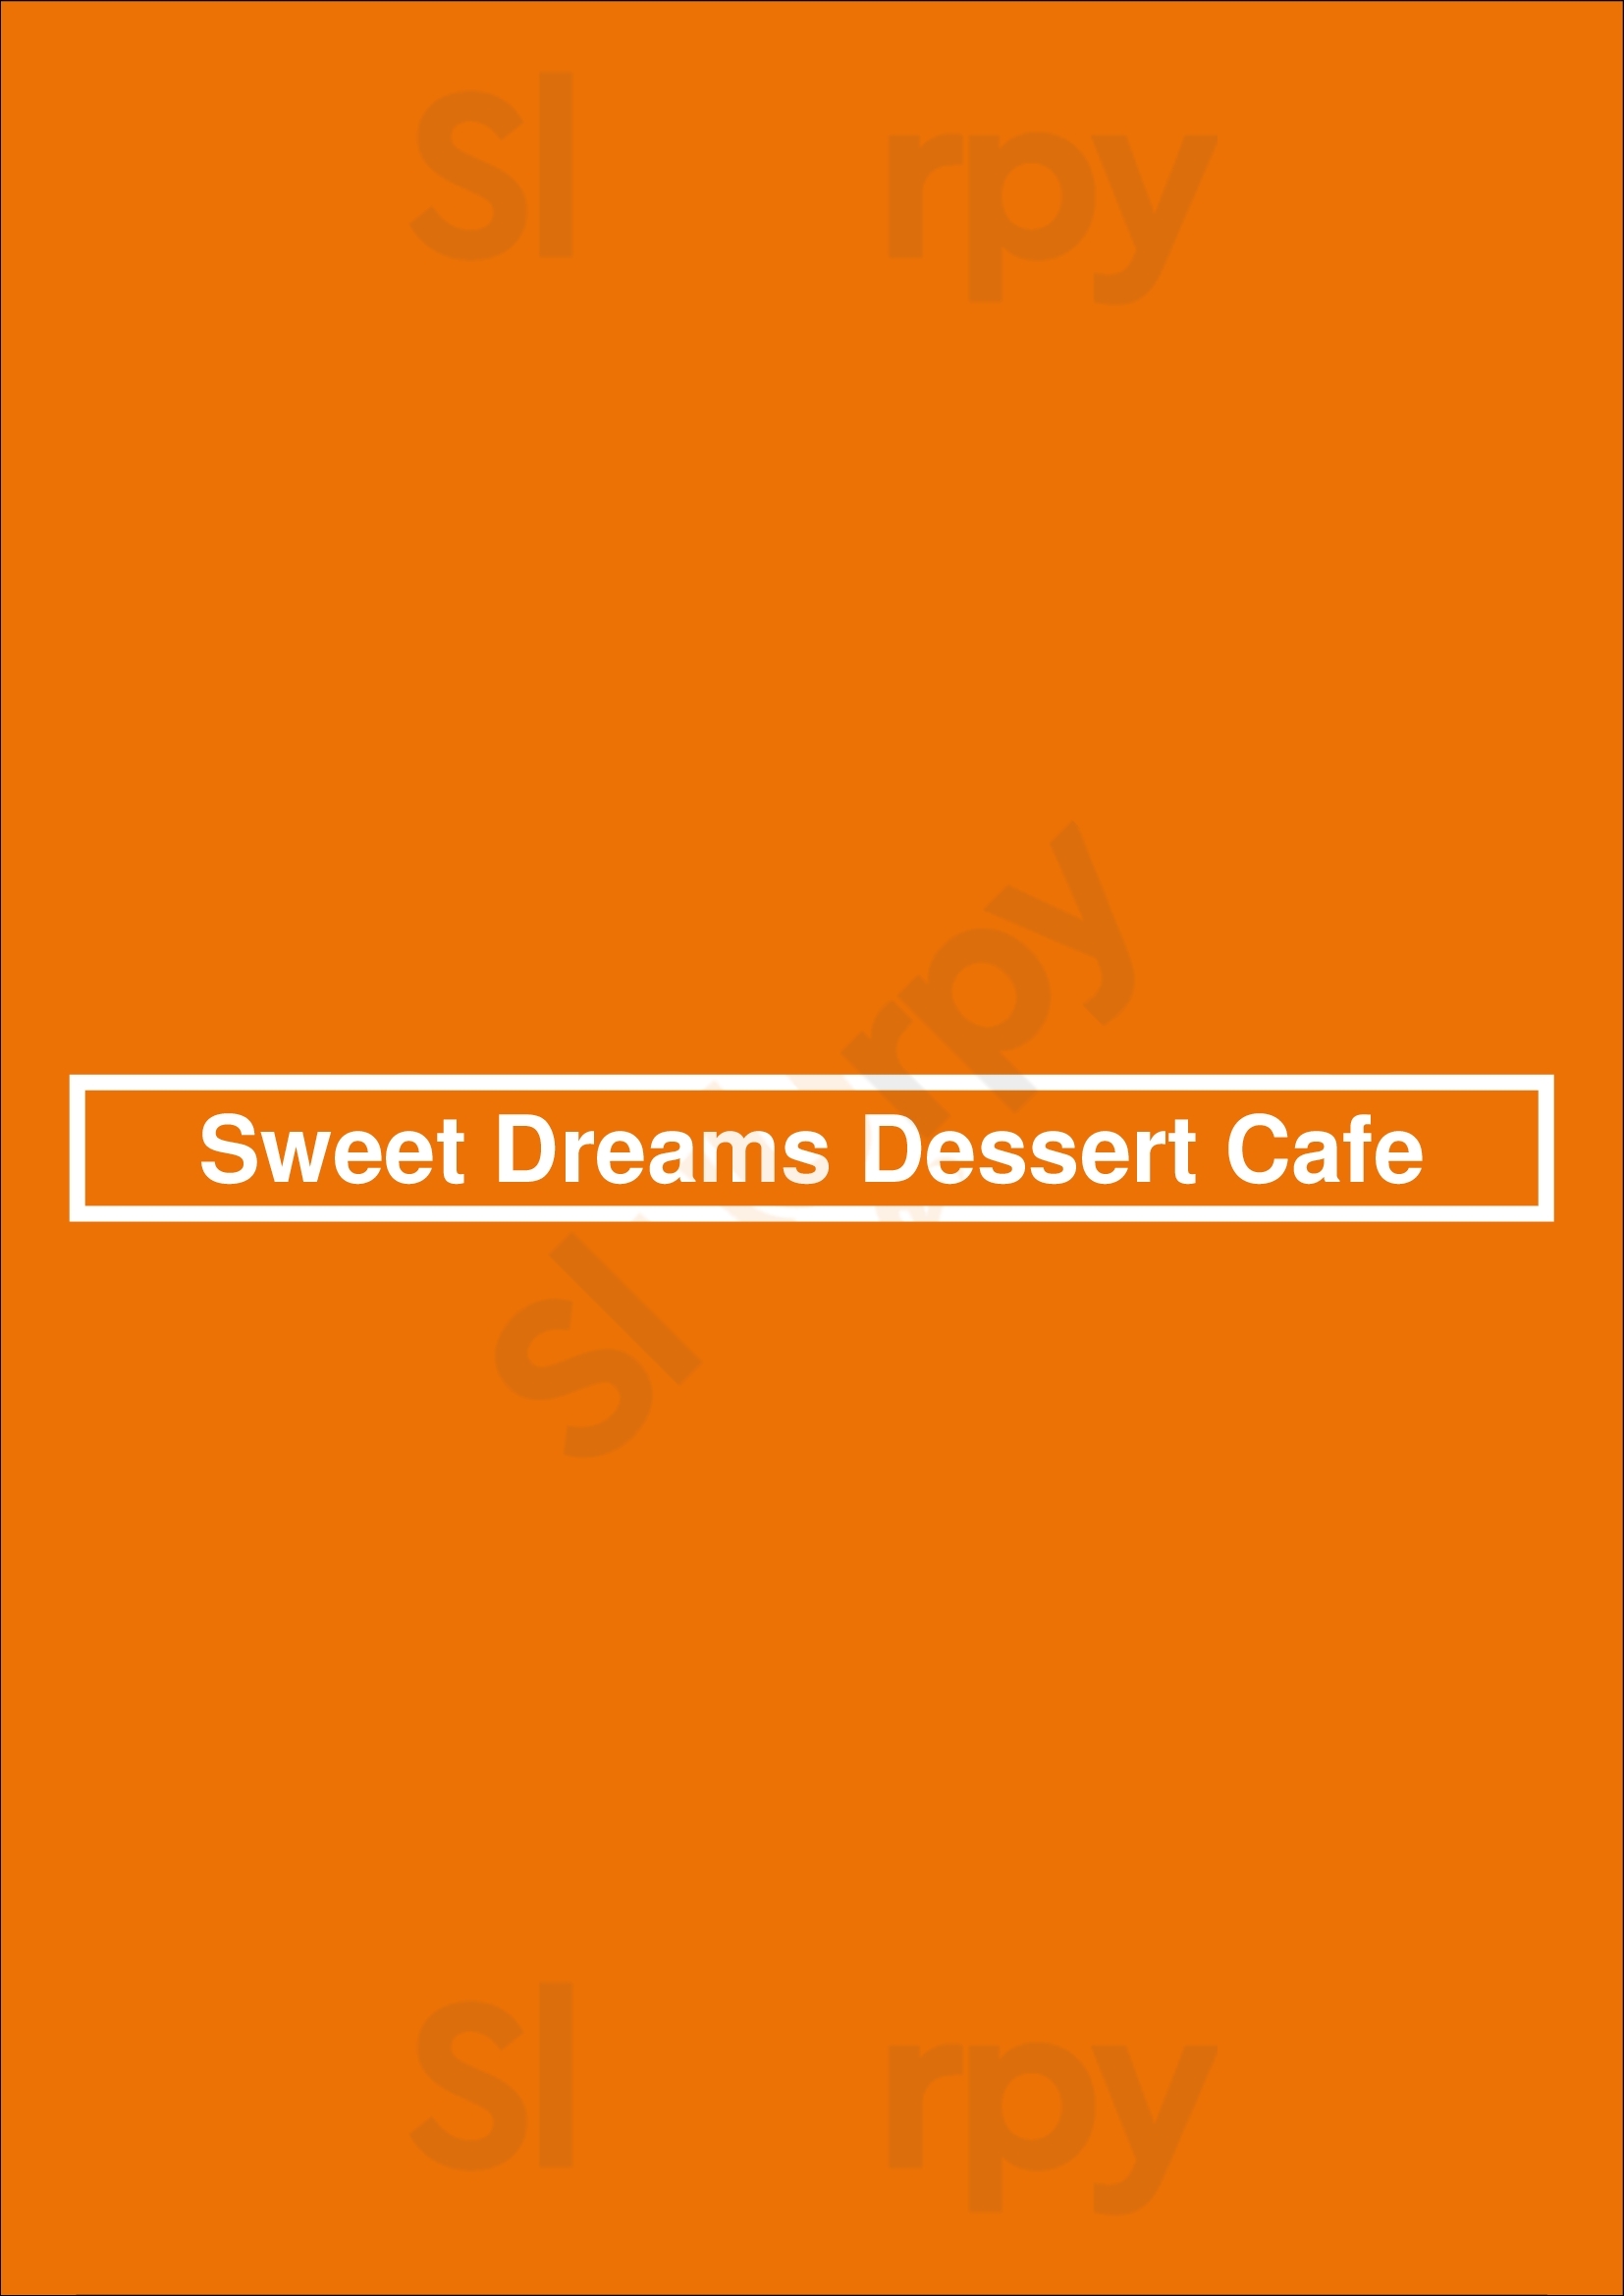 Sweet Dreams Dessert Cafe Newcastle upon Tyne Menu - 1